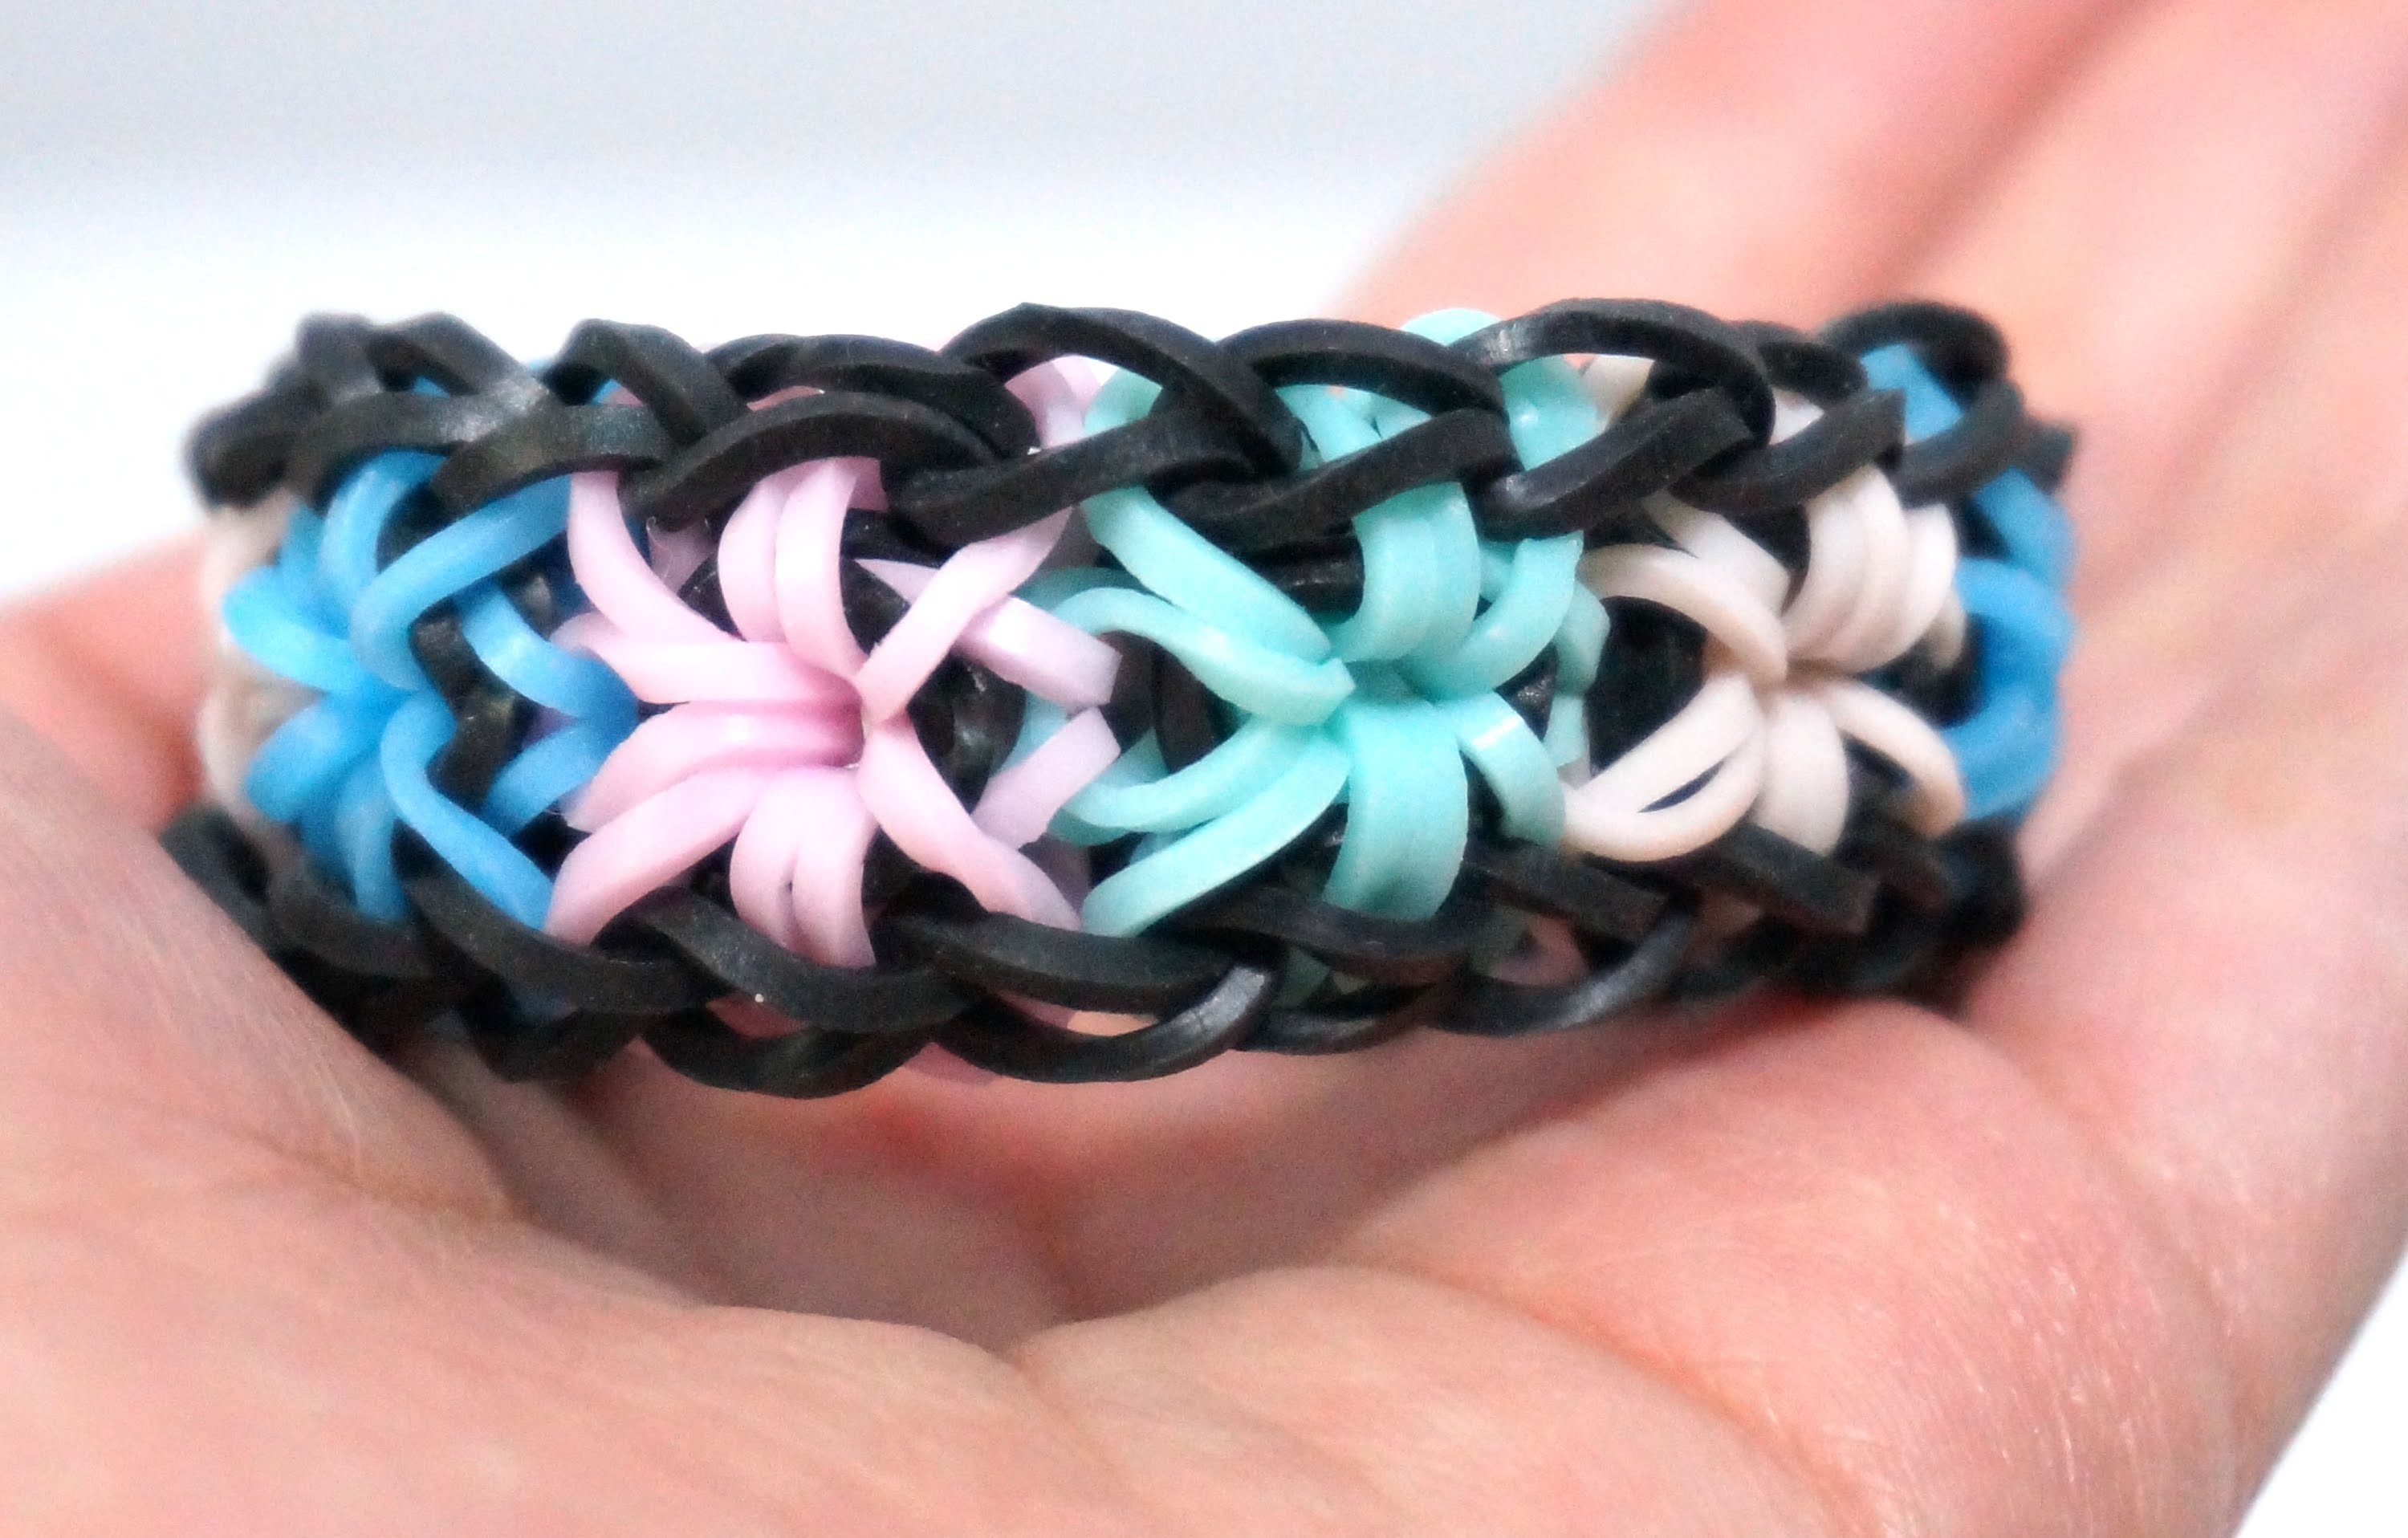 rainbow-loom-starburst-bracelet-with-2-forks-no-hook-colorful-rubber